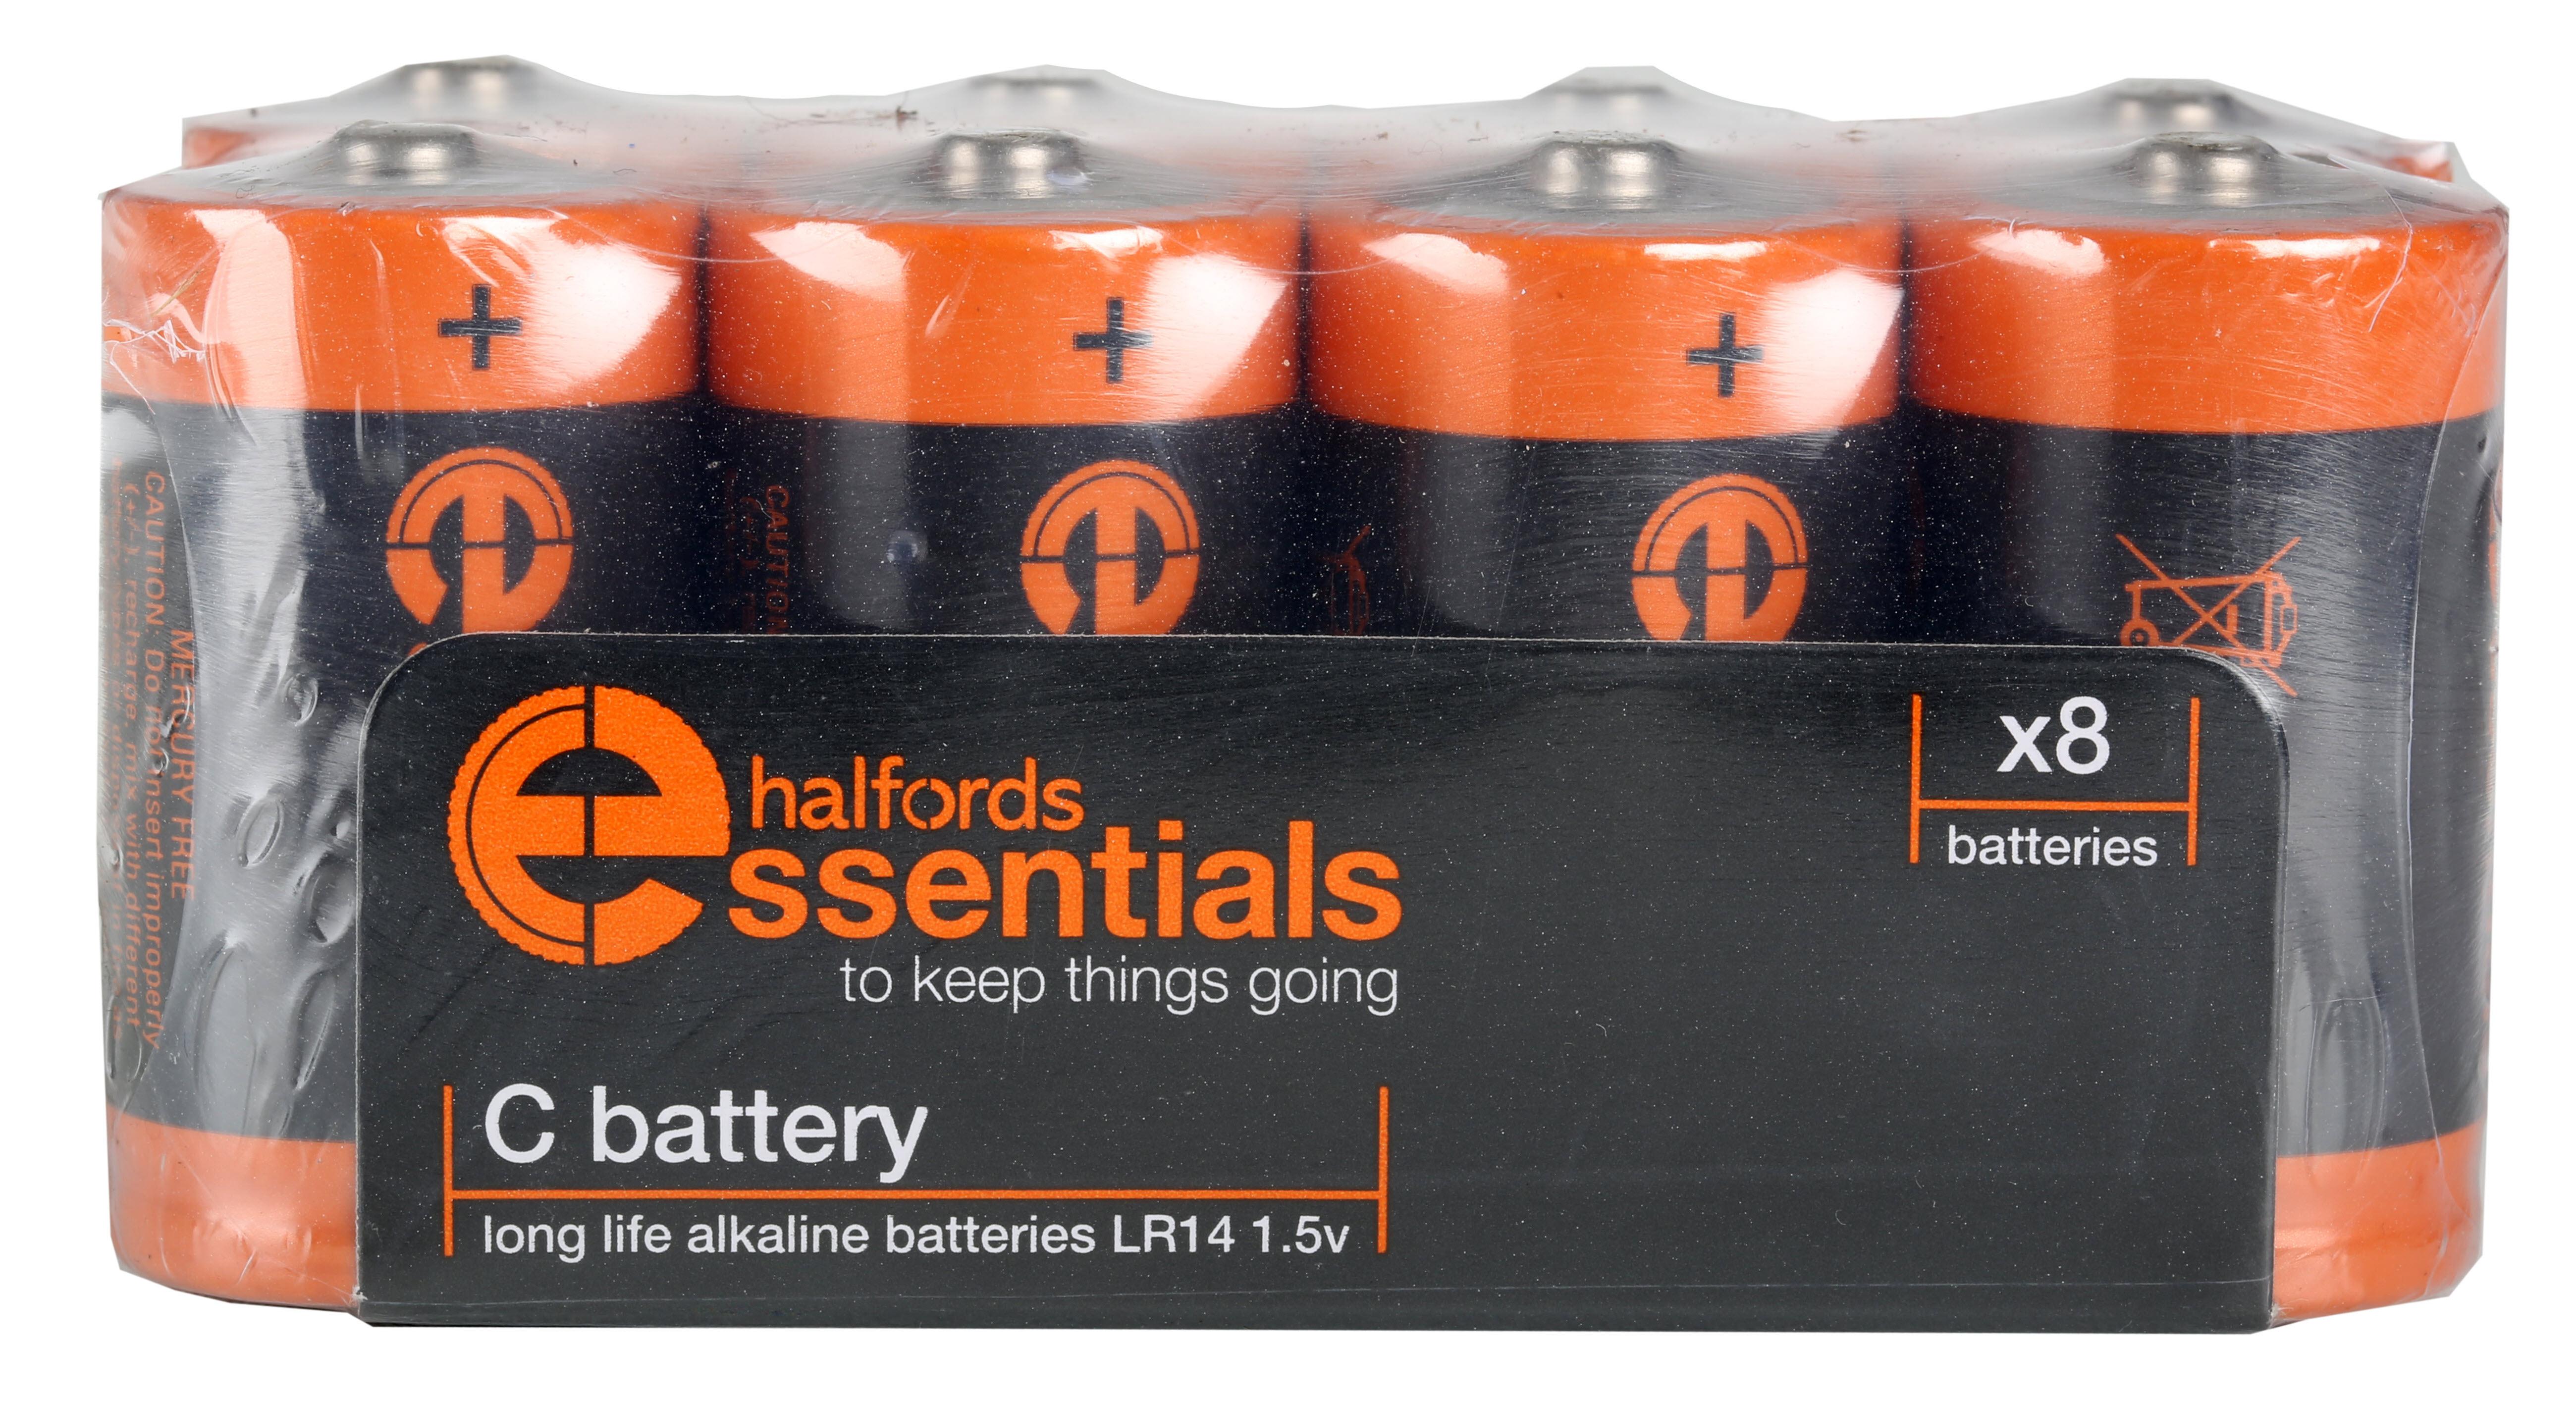 Halfords Essential Batteries C X8